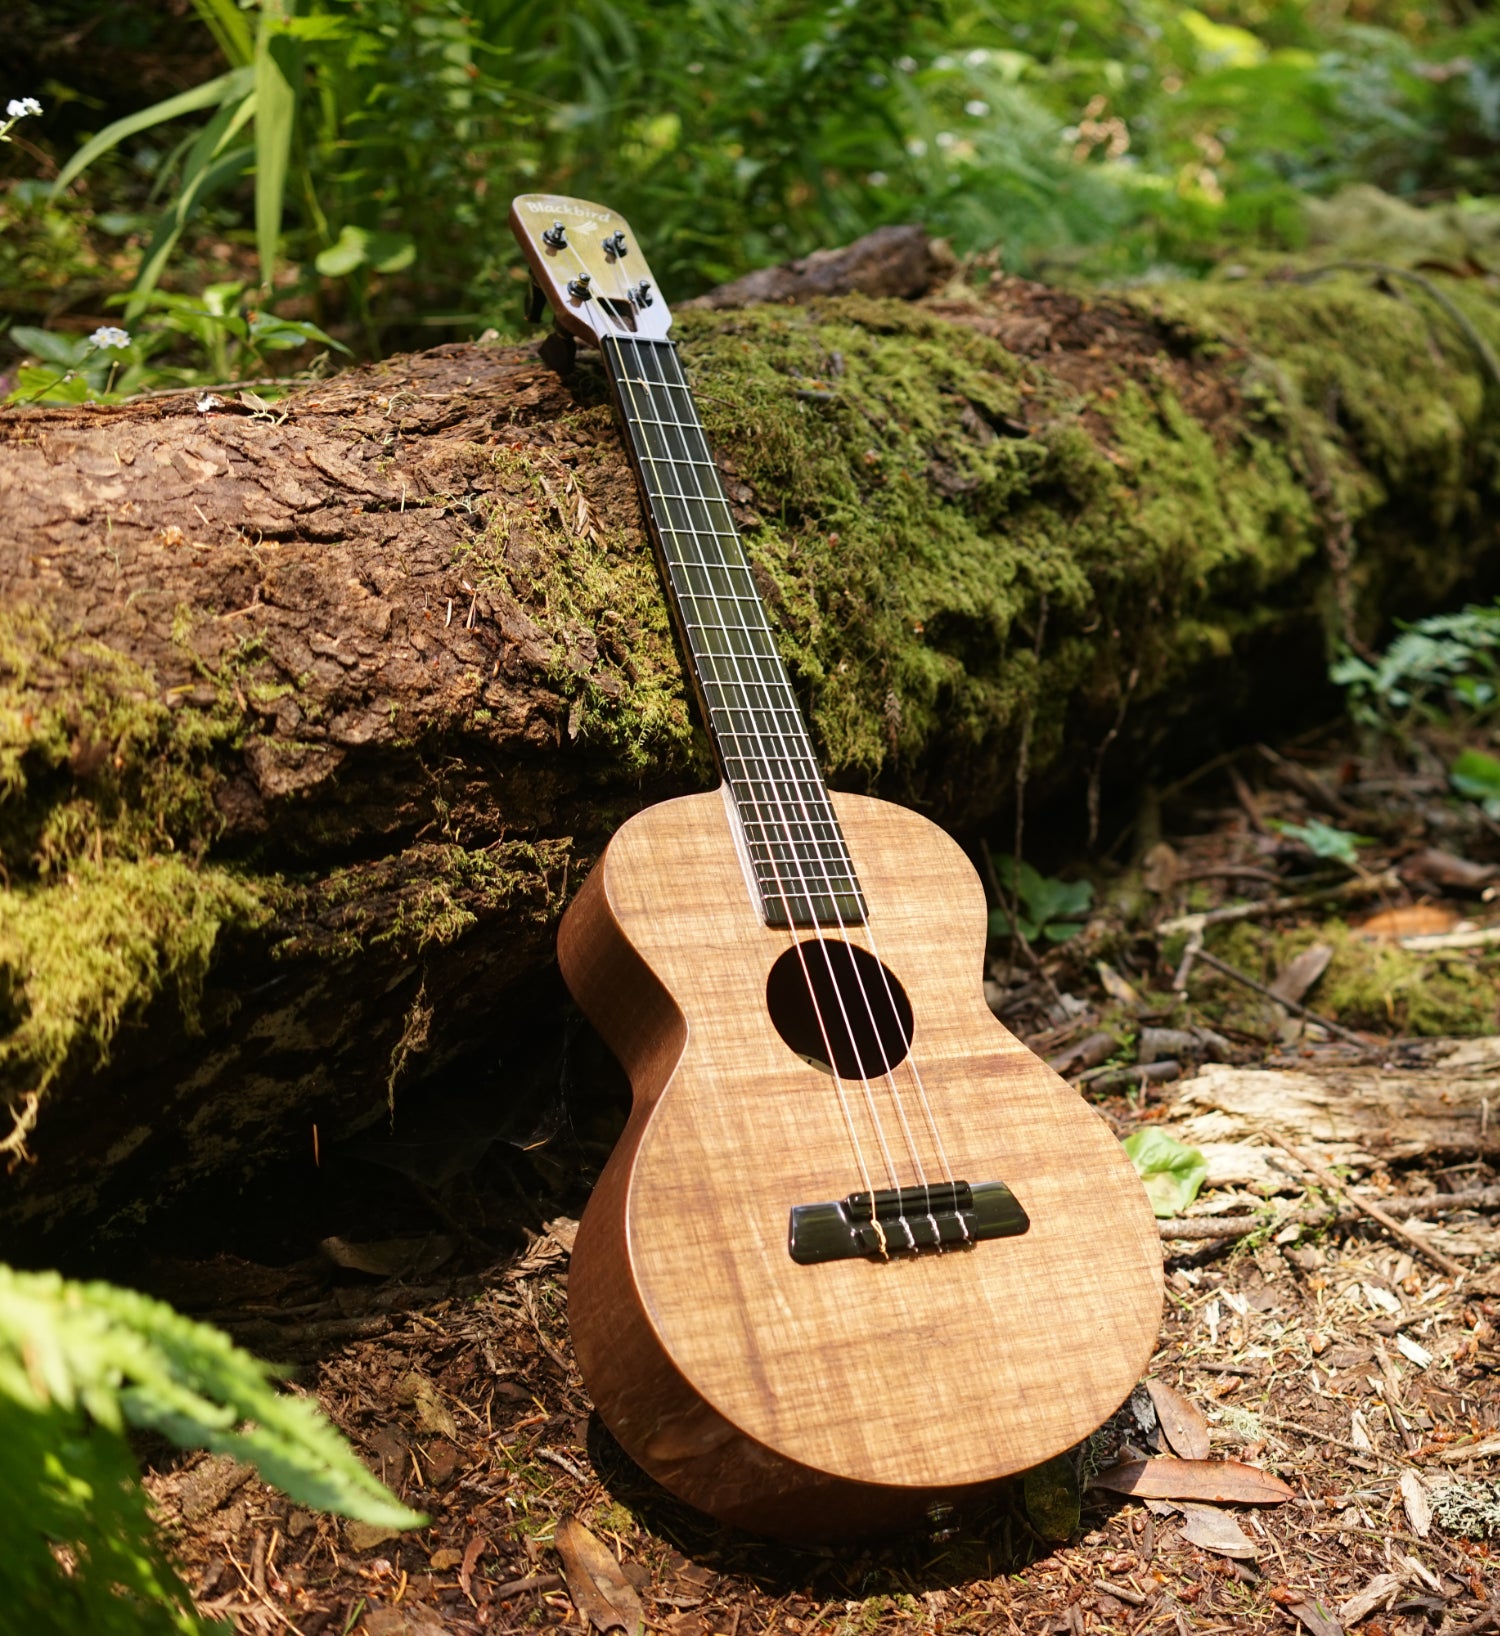 Farallon Ekoa Tenor Ukulele - Blackbird Guitars